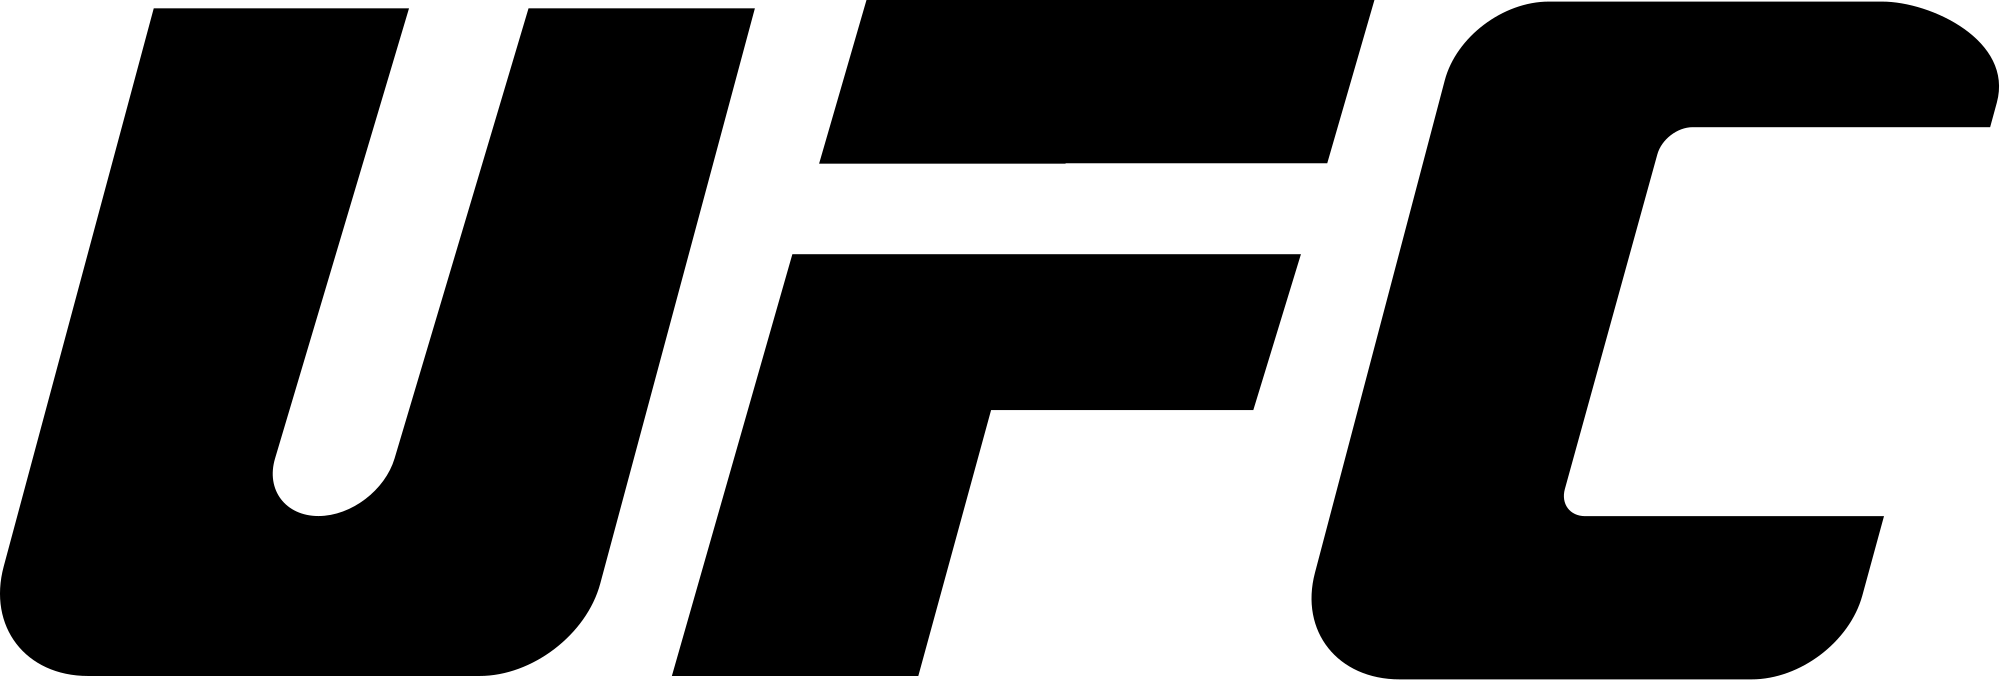 2000px-UFC_logo.svg